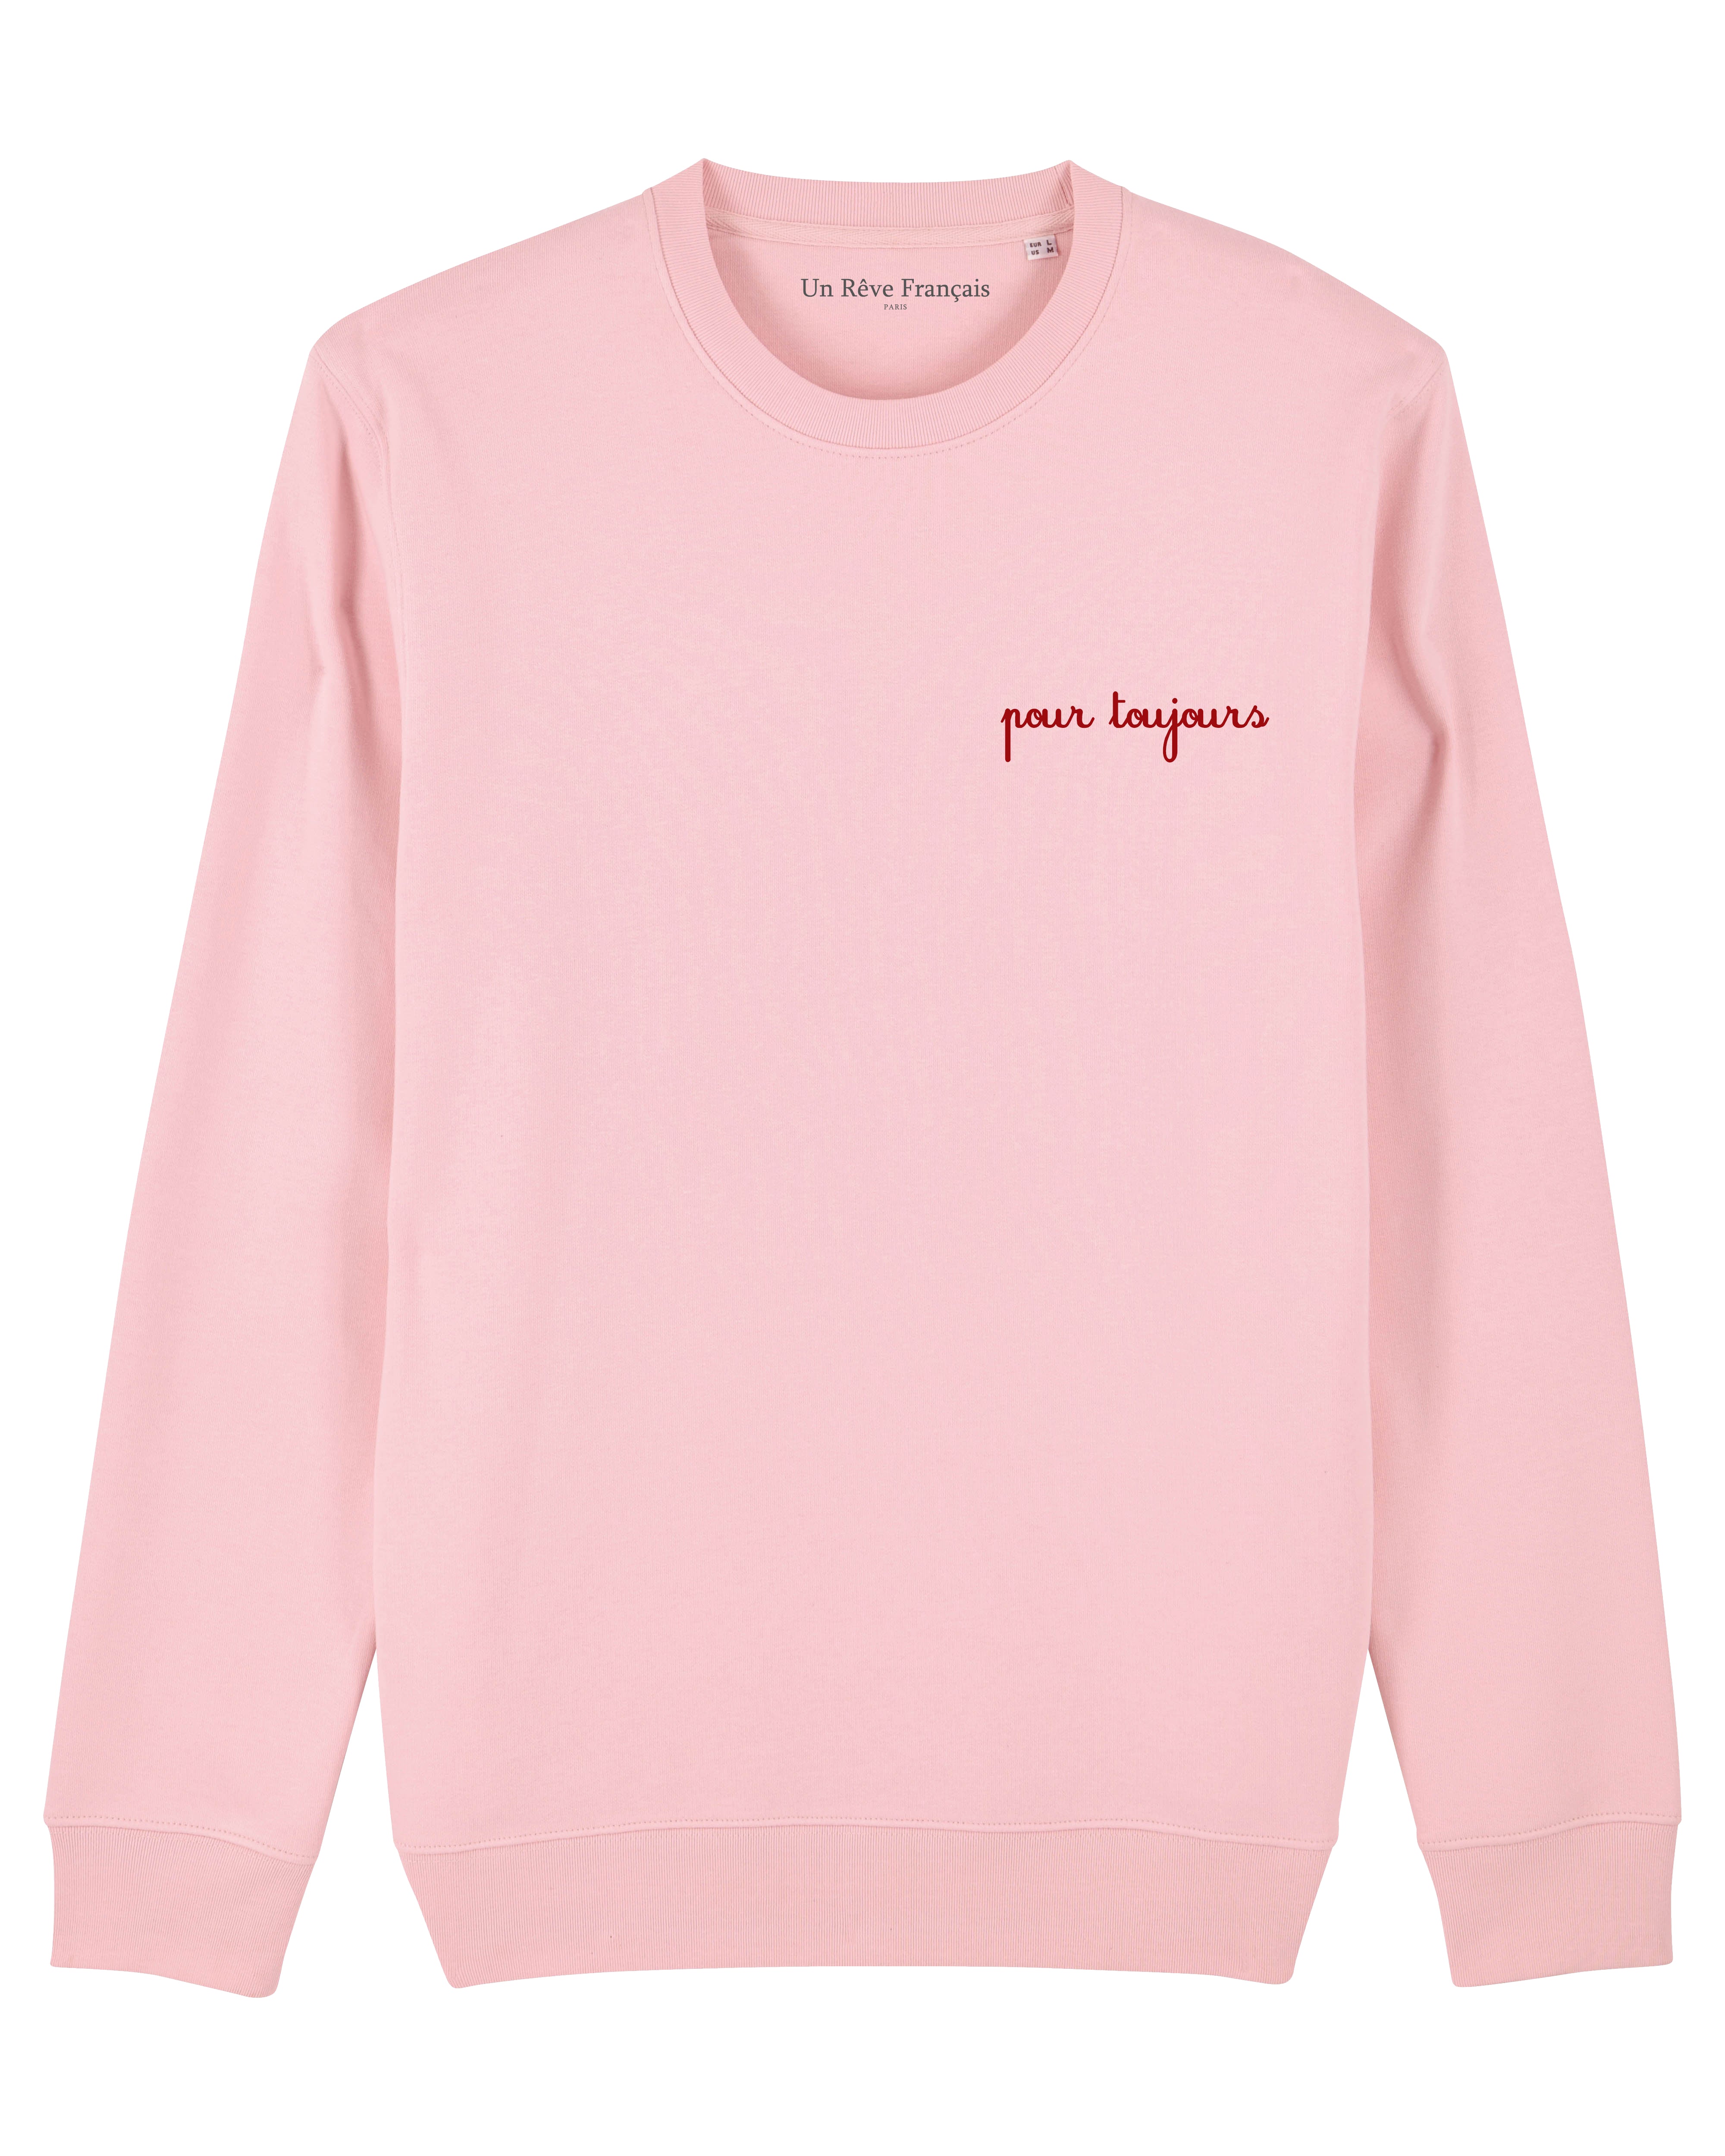 Sweatshirt "Pour toujours"